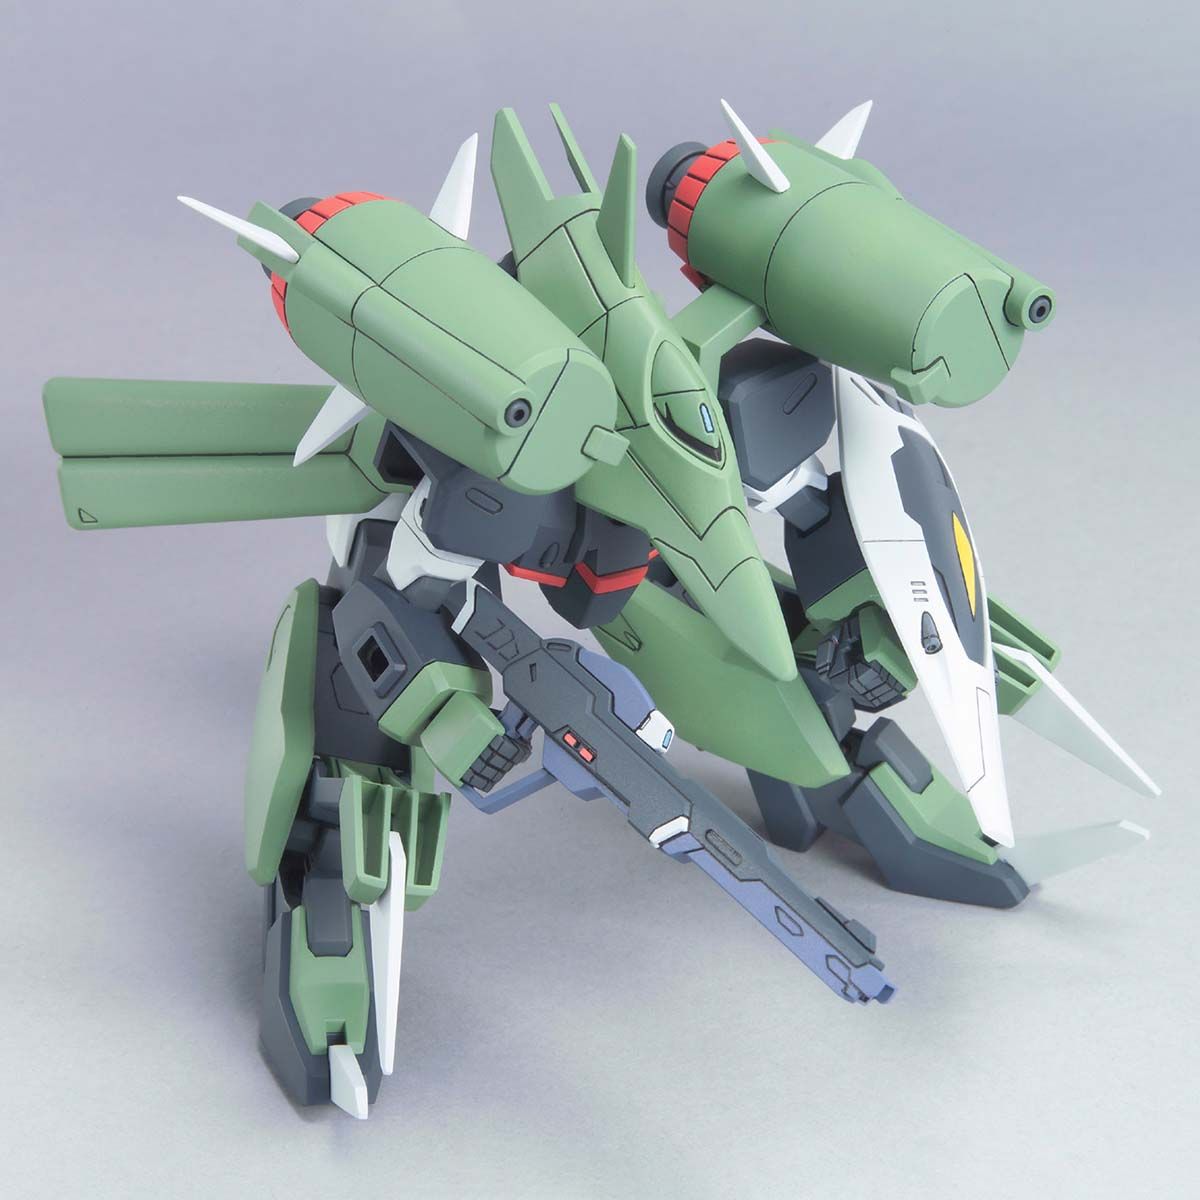 Bandai 1/144 HGGS 019 ZGMF-X24S Chaos Gundam Plastic Model Kit